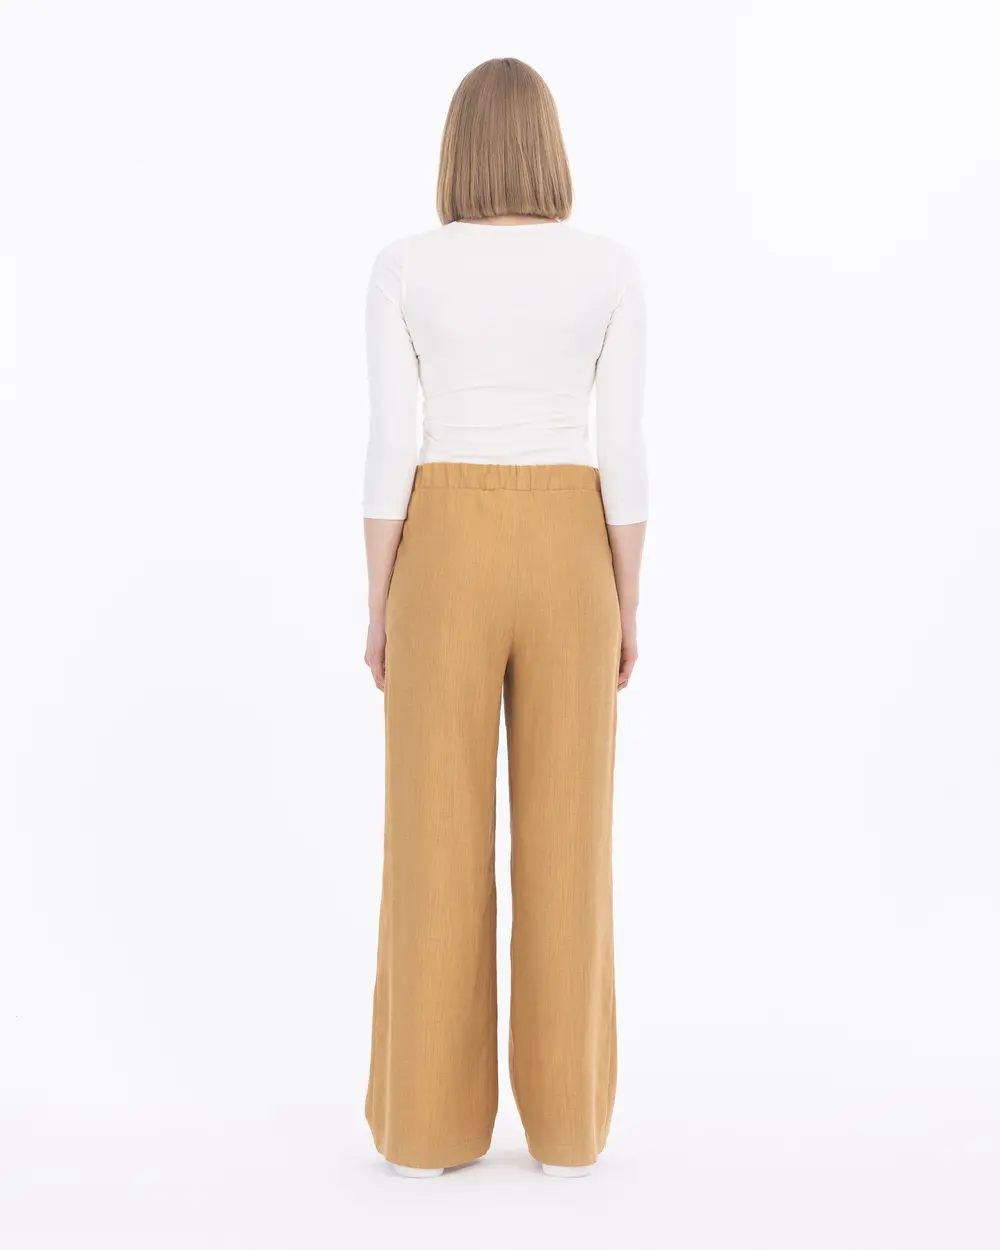 Wide Cut Elastic Waist Full Length Trousers